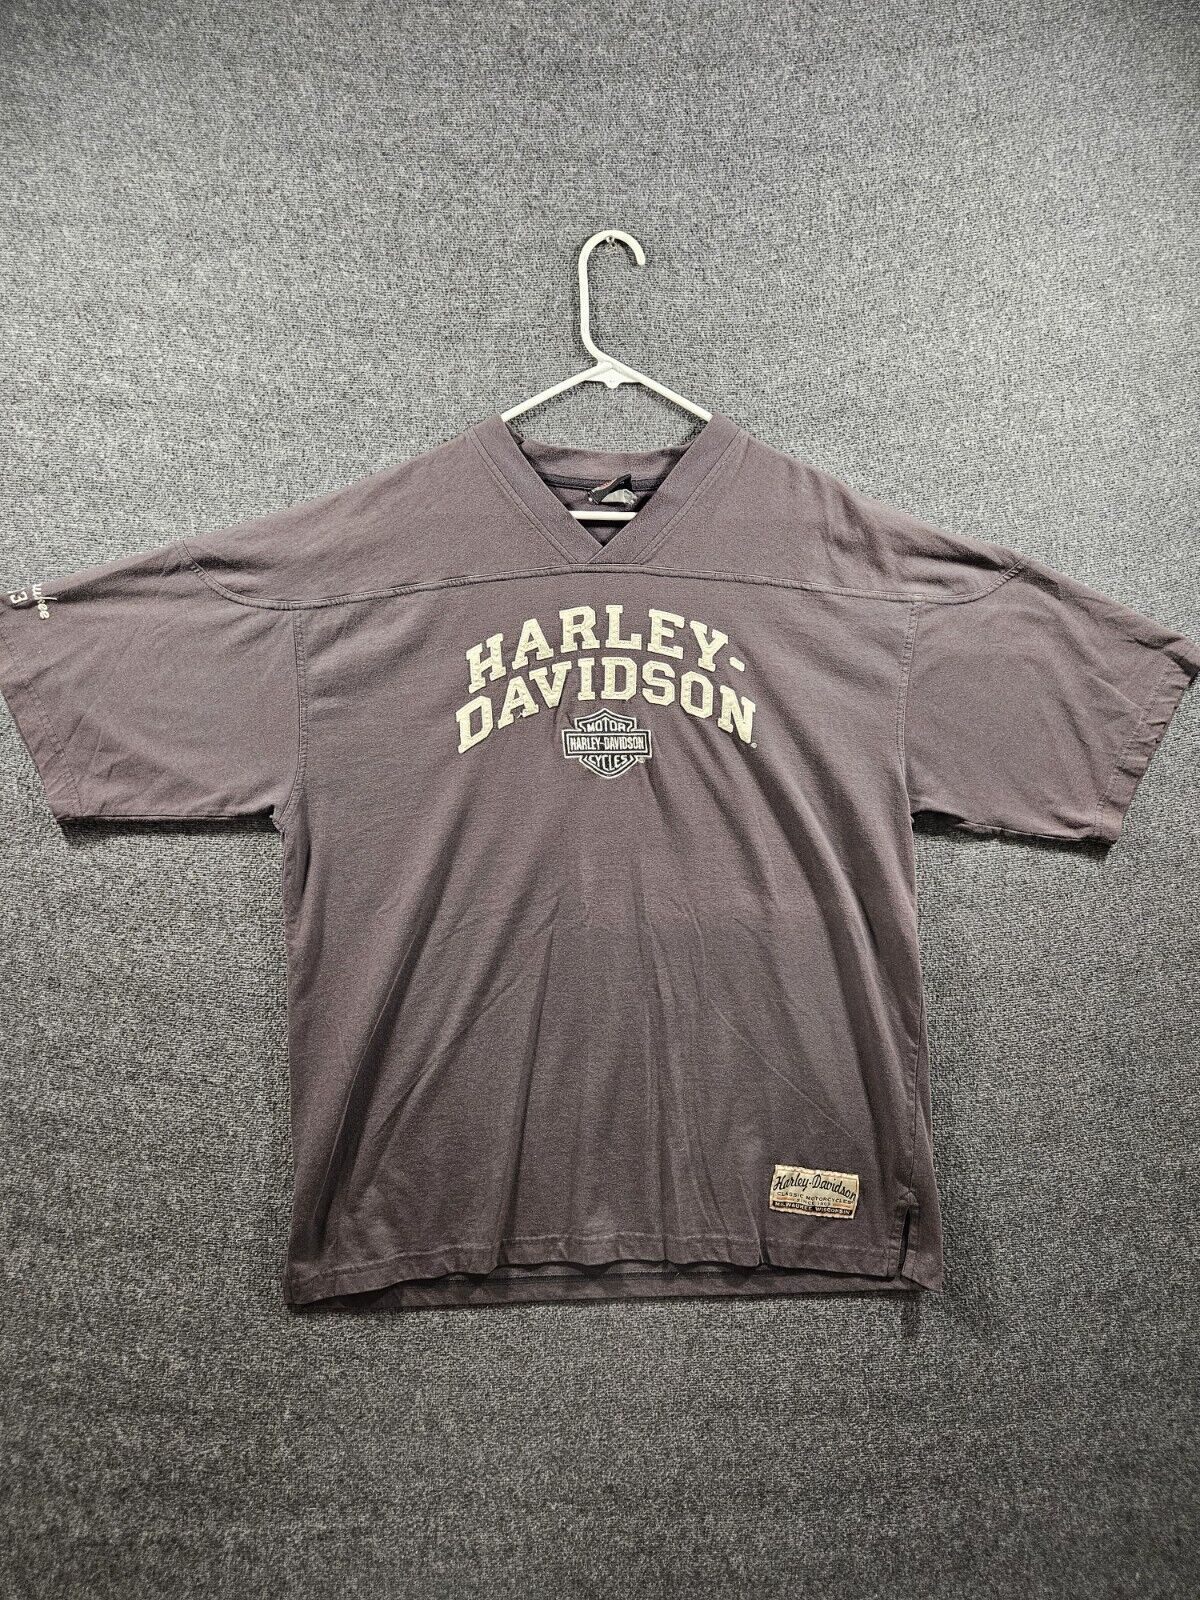 Vintage Men's Harley-Davidson Shirt Las Vegas Size Unknown Used FAST SHIPPING